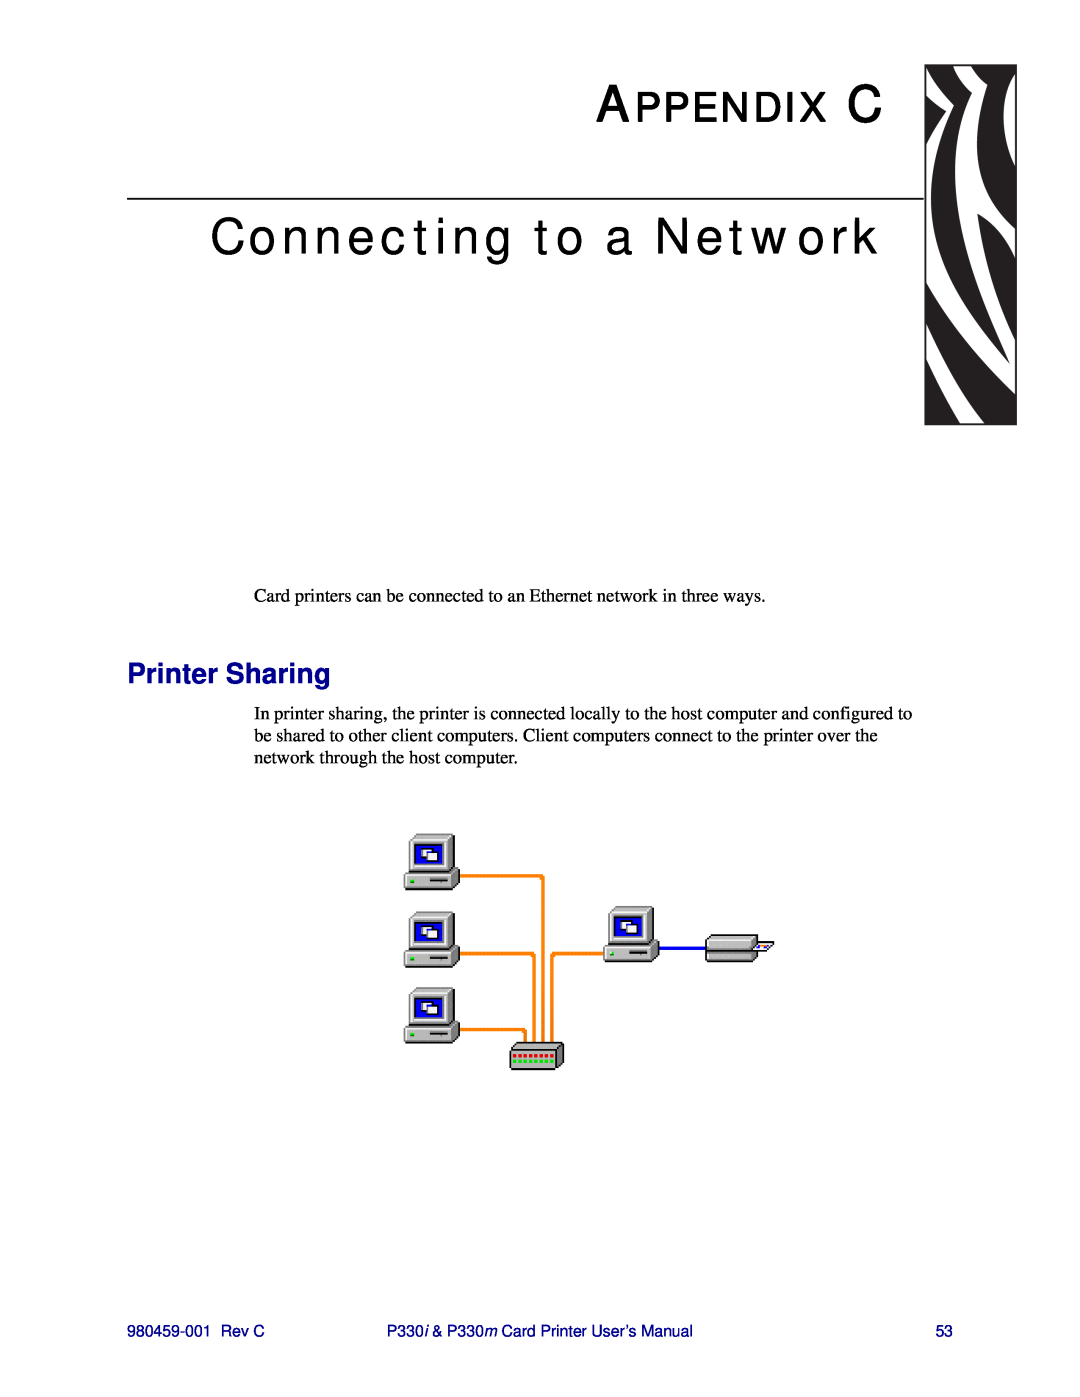 Zebra Technologies P330m, P330i user manual Connecting to a Network, Appendix C, Printer Sharing, Rev C 